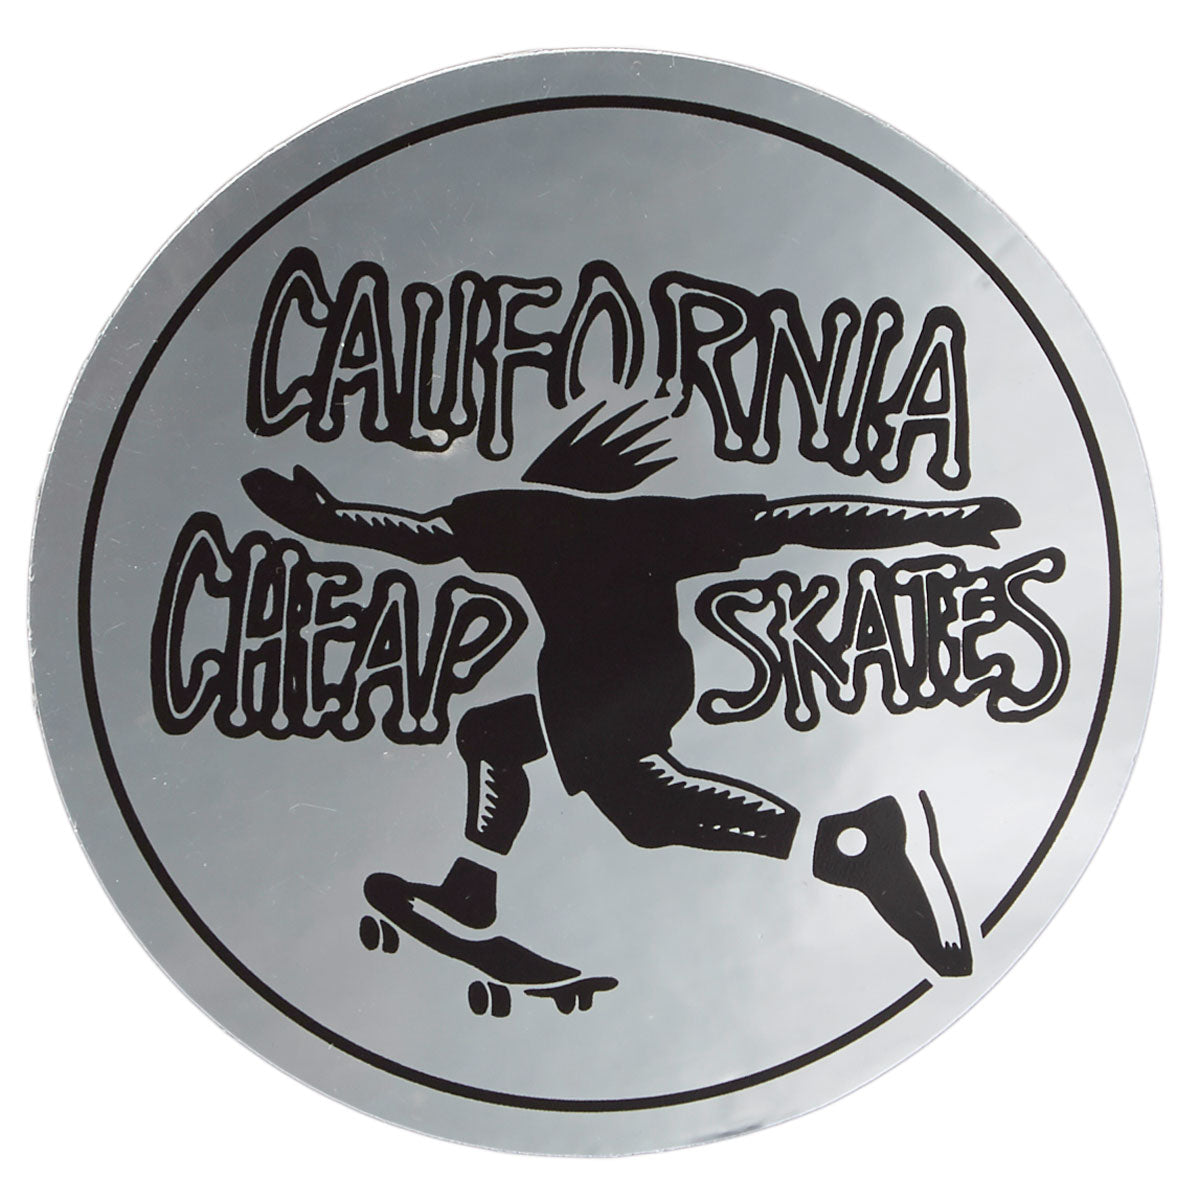 CCS Cheap Skates Sticker - Chrome/Black image 1